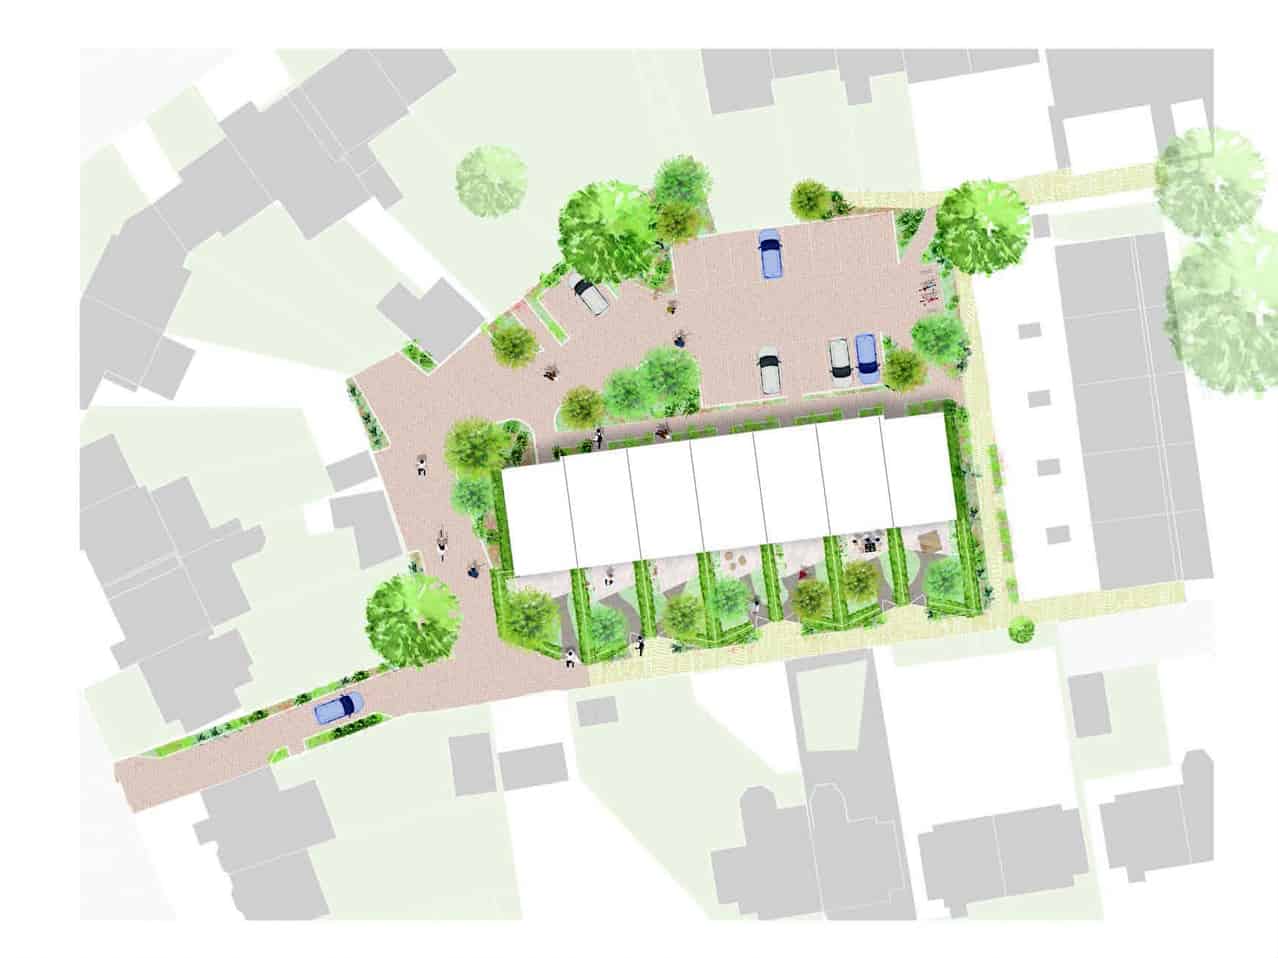 ECD designed affordable Passivhaus homes for Gosport District Council